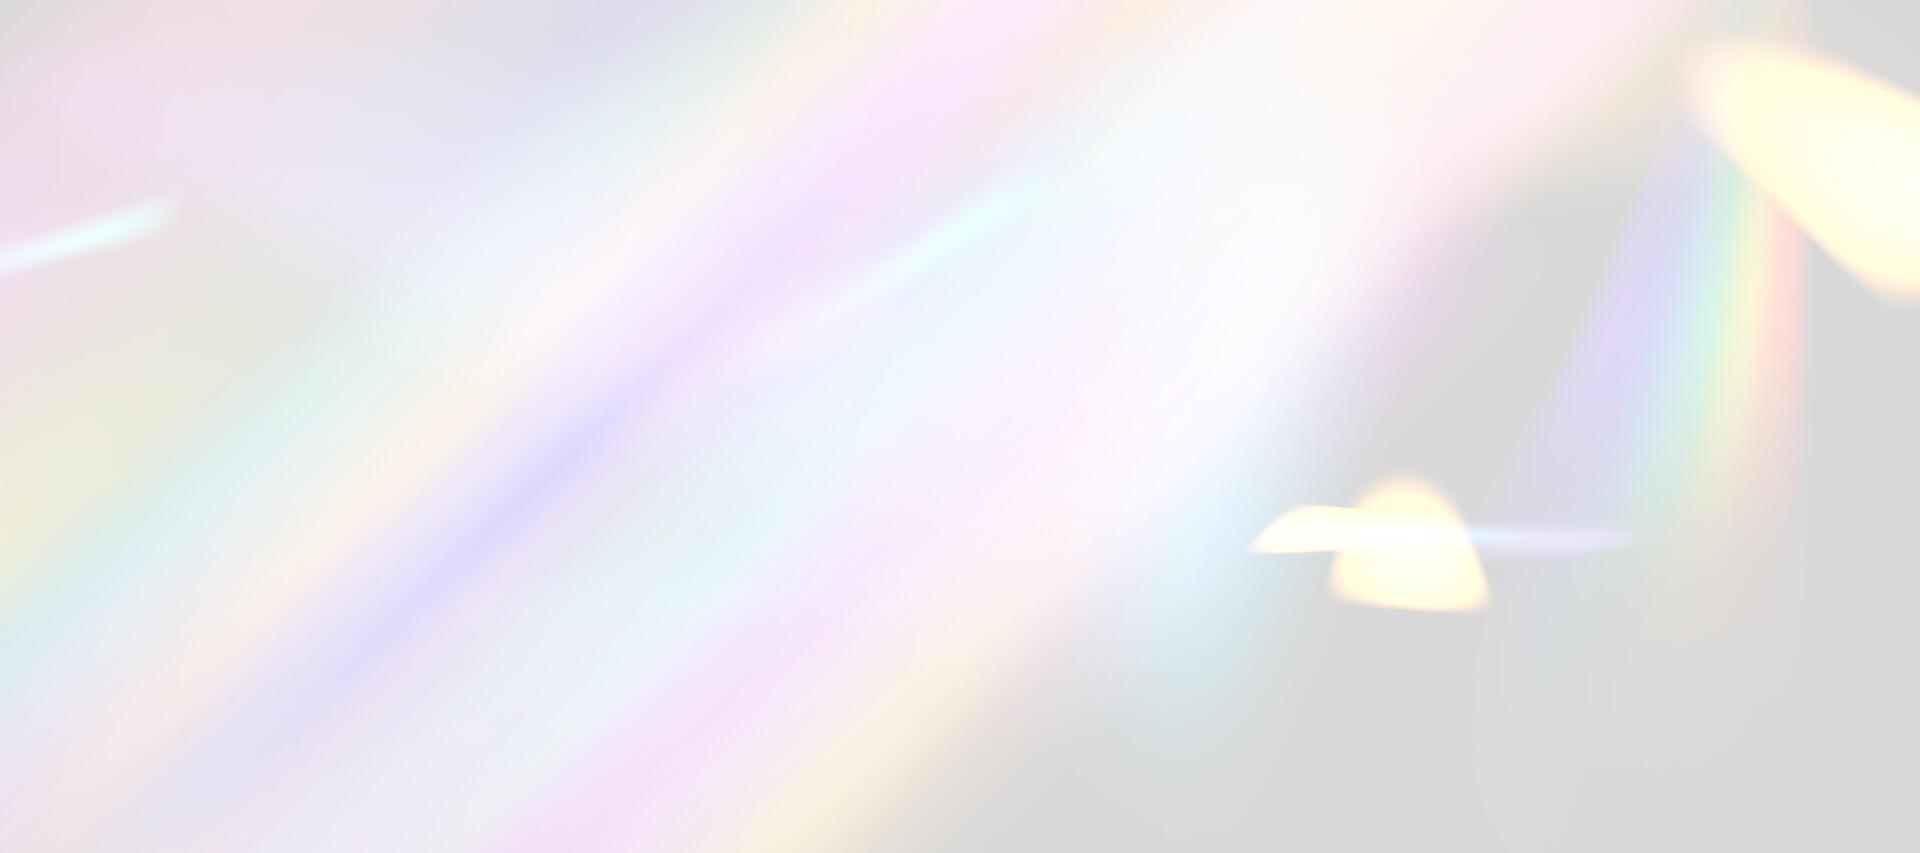 borroso arco iris refracción cubrir efecto. ligero lente prisma efecto. holográfico reflexión, cristal llamarada fuga sombra cubrir. vector